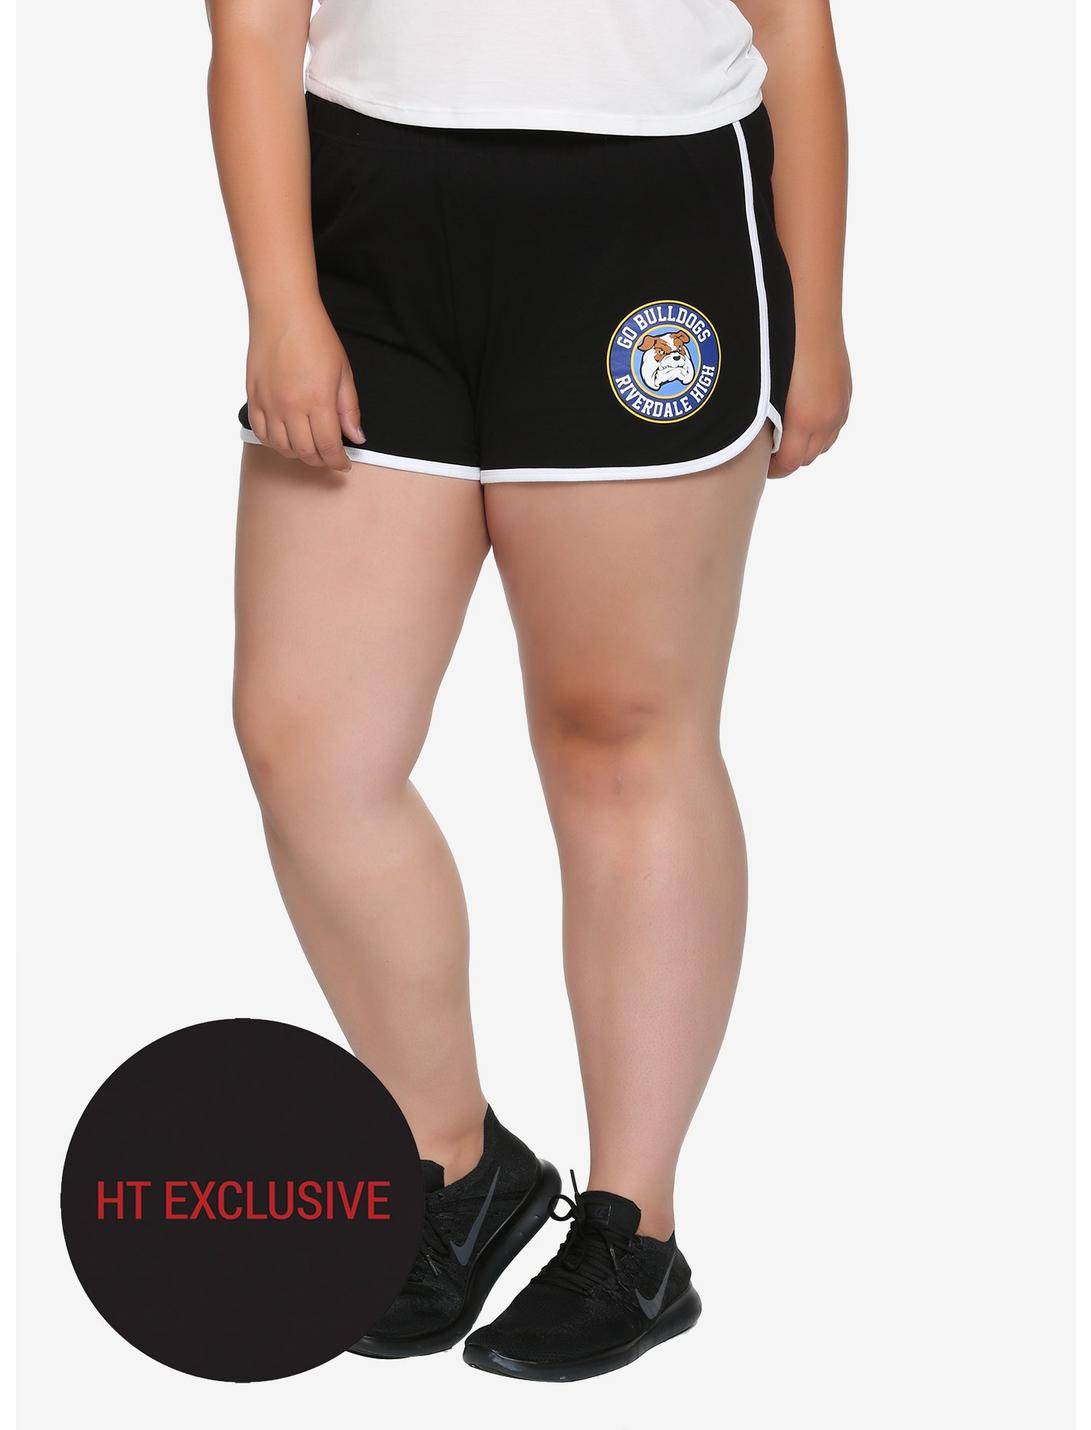 Riverdale High School Bulldog Girls Shorts Plus Size Hot Topic Exclusive, BLACK, hi-res